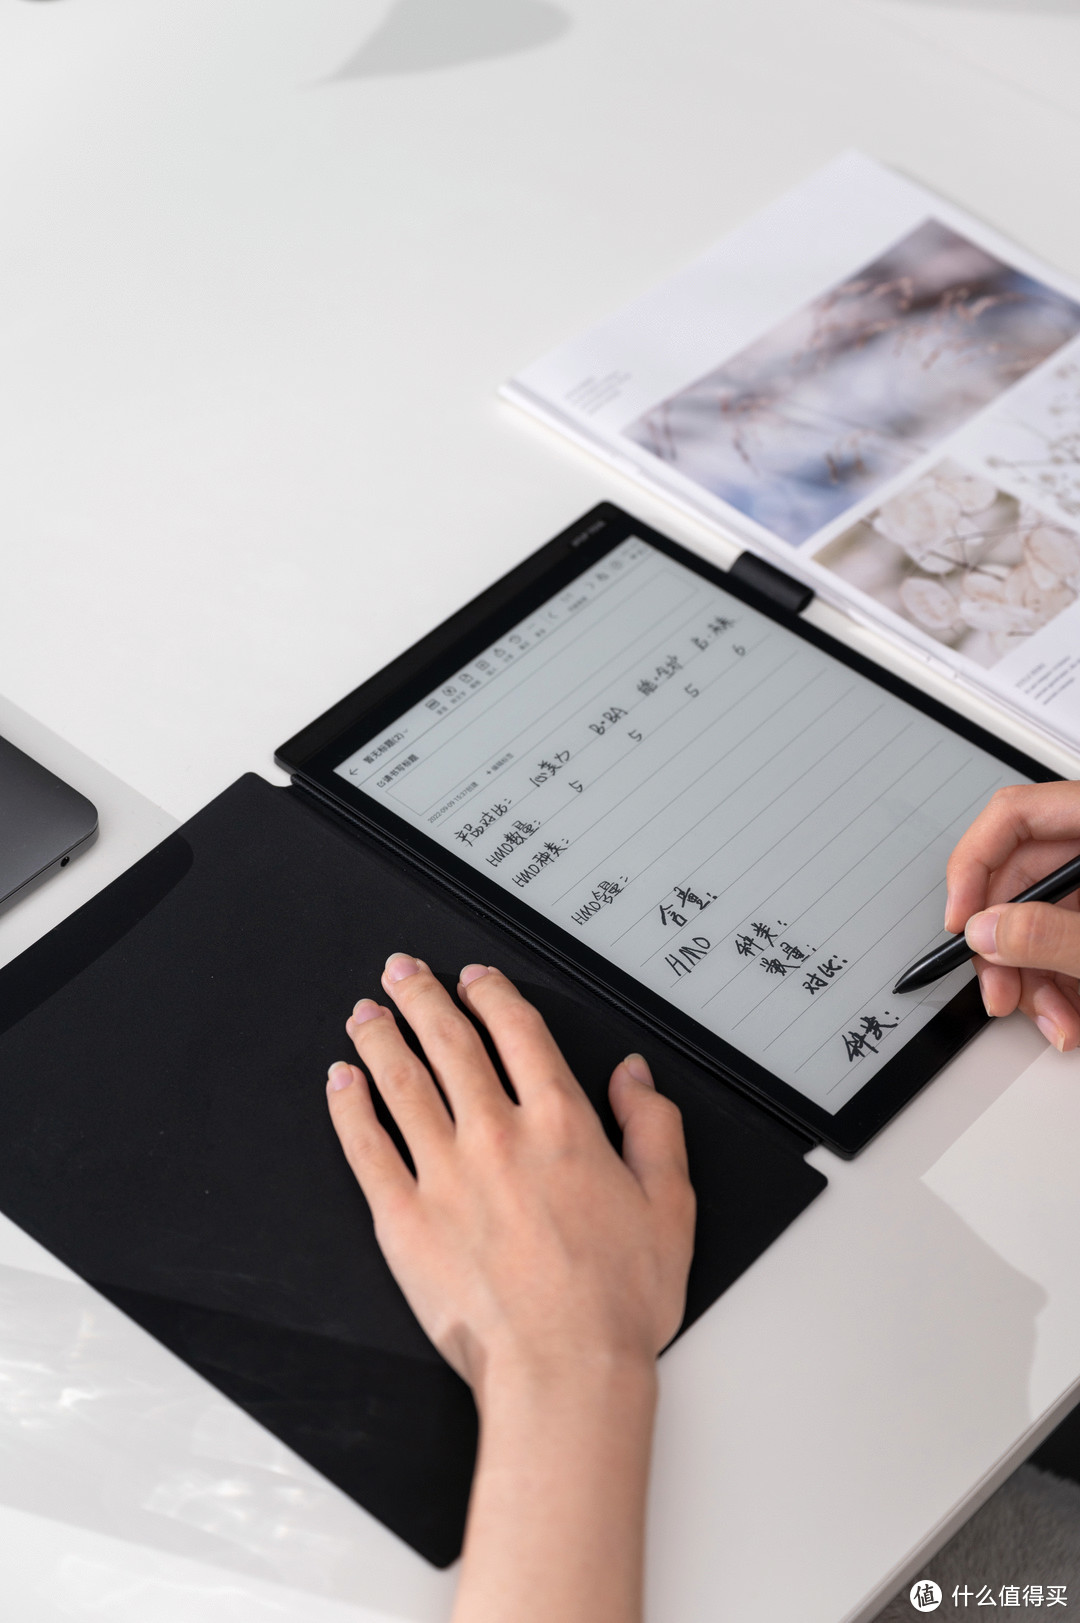 X2柔性墨水屏采用0.1mm悬空屏专利技术，具有真实还原纸张书写的特点